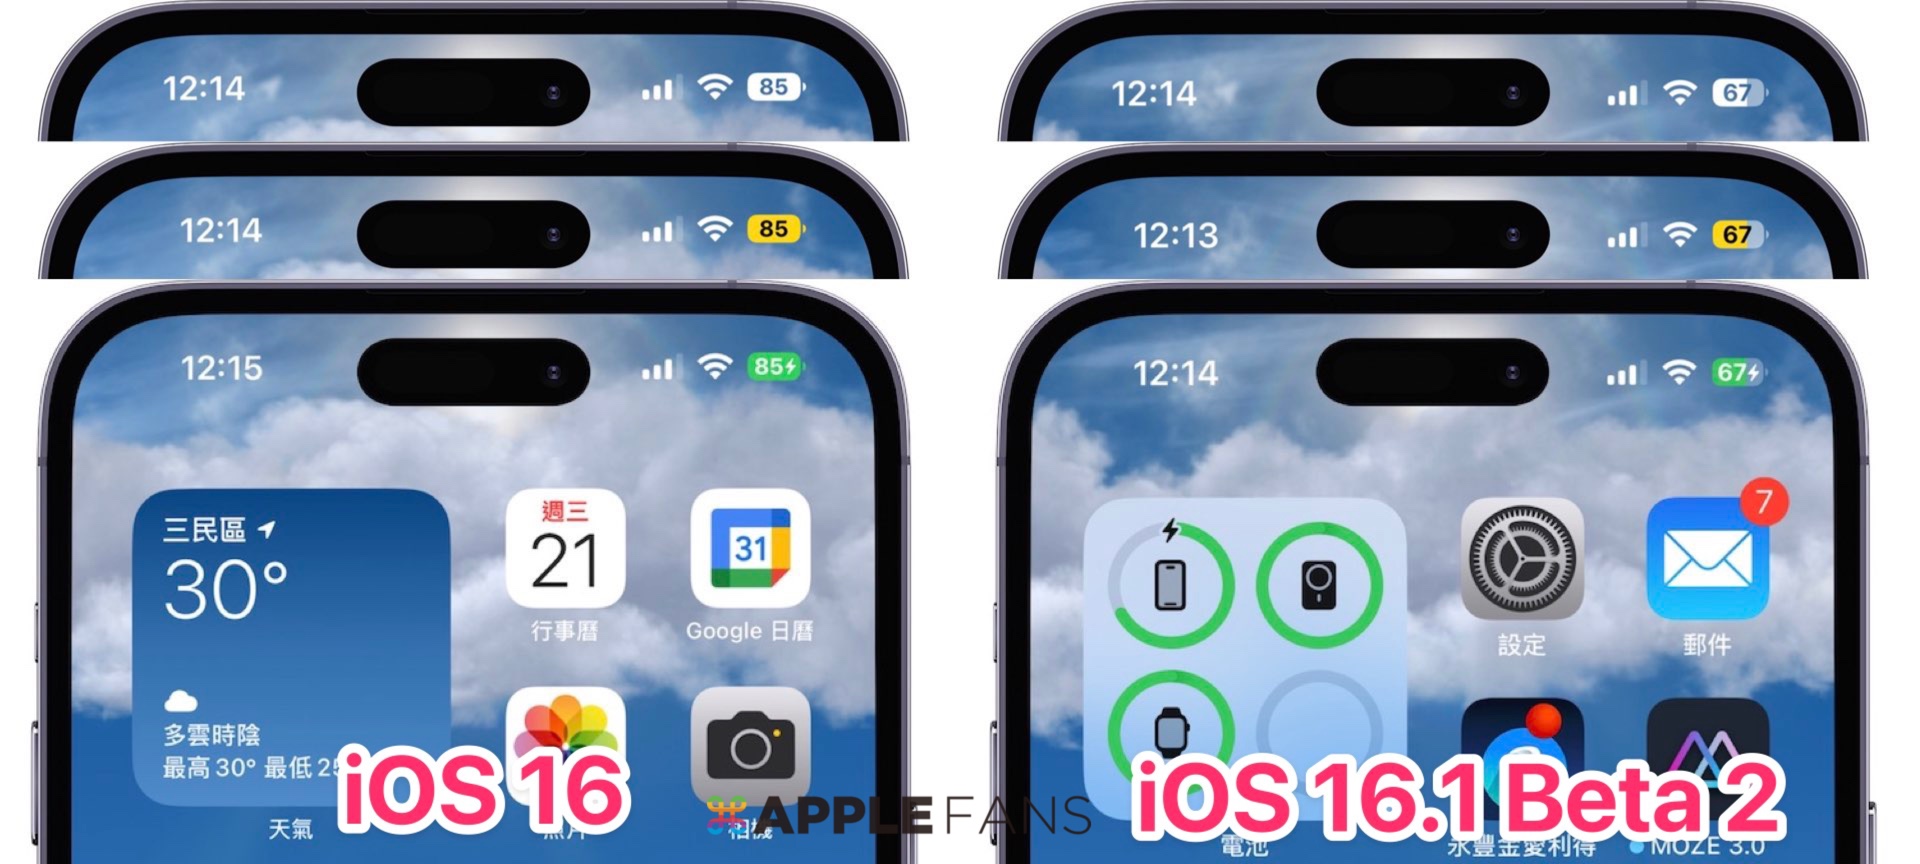 iOS 16.1 Beta 2 電池圖示